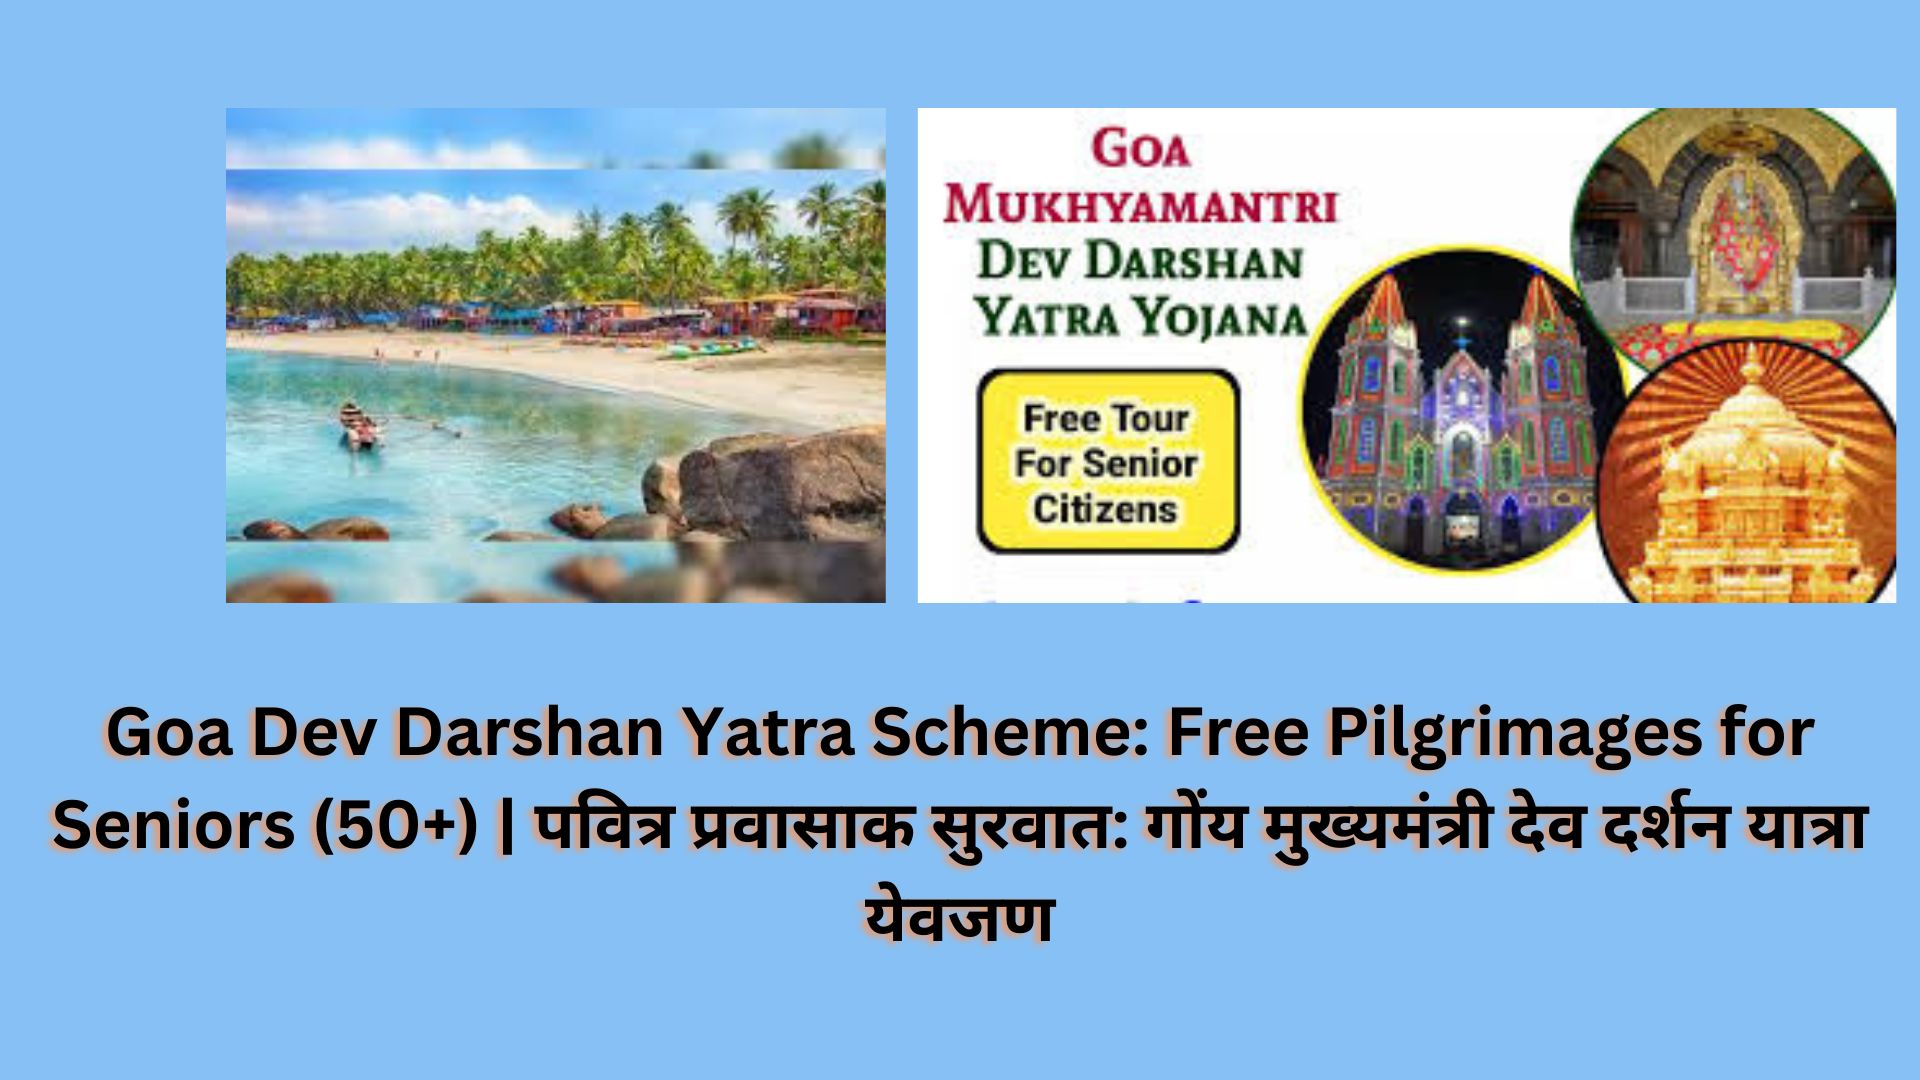 Goa Dev Darshan Yatra Scheme: Free Pilgrimages for Seniors (50+) | पवित्र प्रवासाक सुरवात: गोंय मुख्यमंत्री देव दर्शन यात्रा येवजण